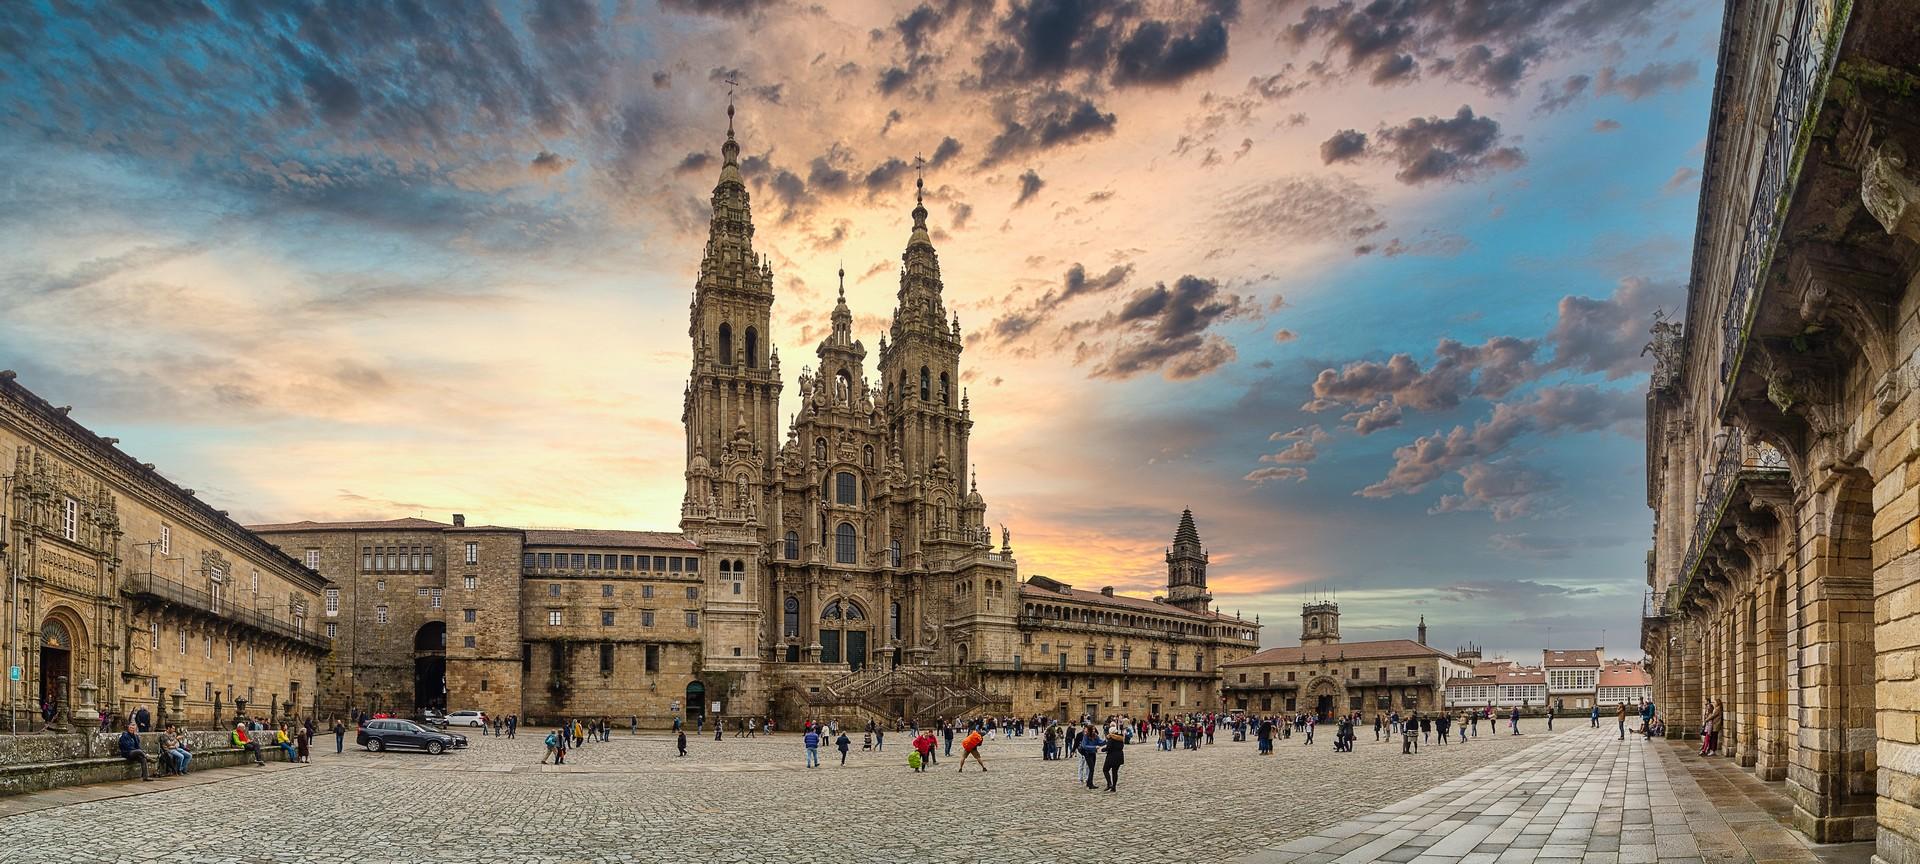 City square in Santiago de Compostela at dawn